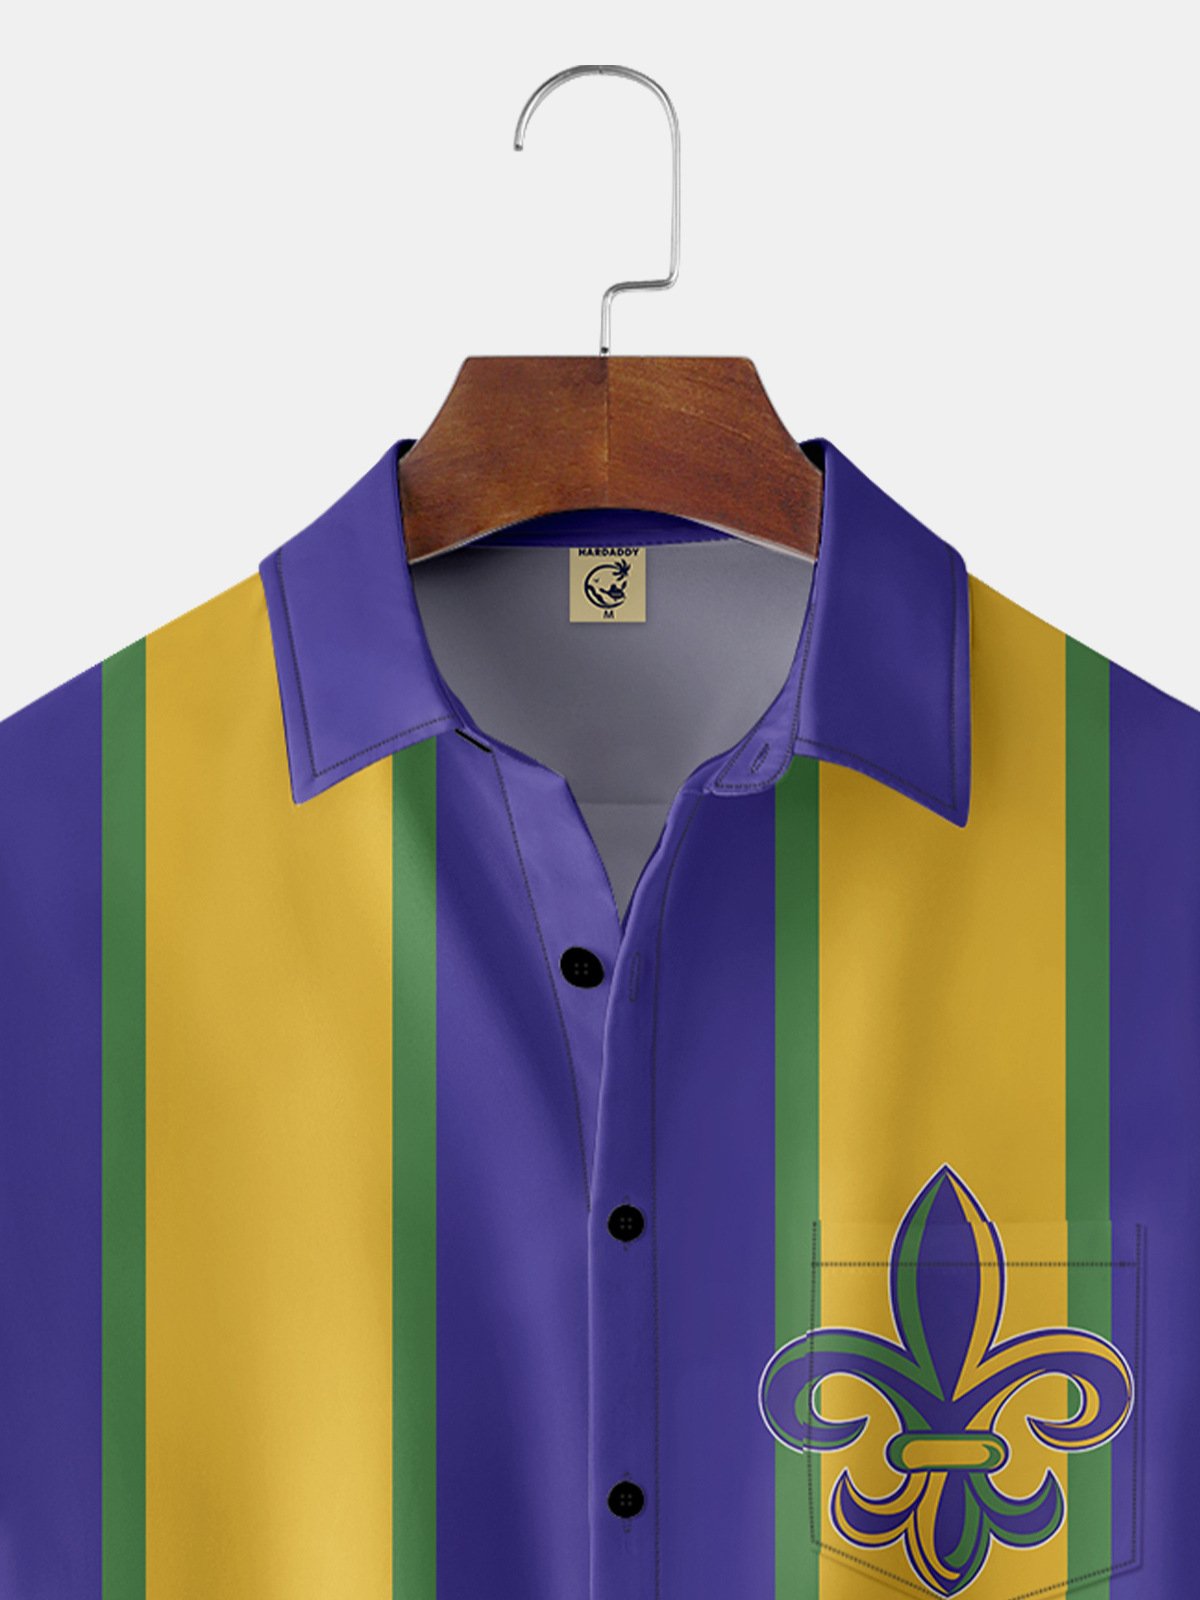 Hardaddy Mardi Gras Day Regular Fit Purple Chest Pocket Short Sleeve Bowling Shirt For Men